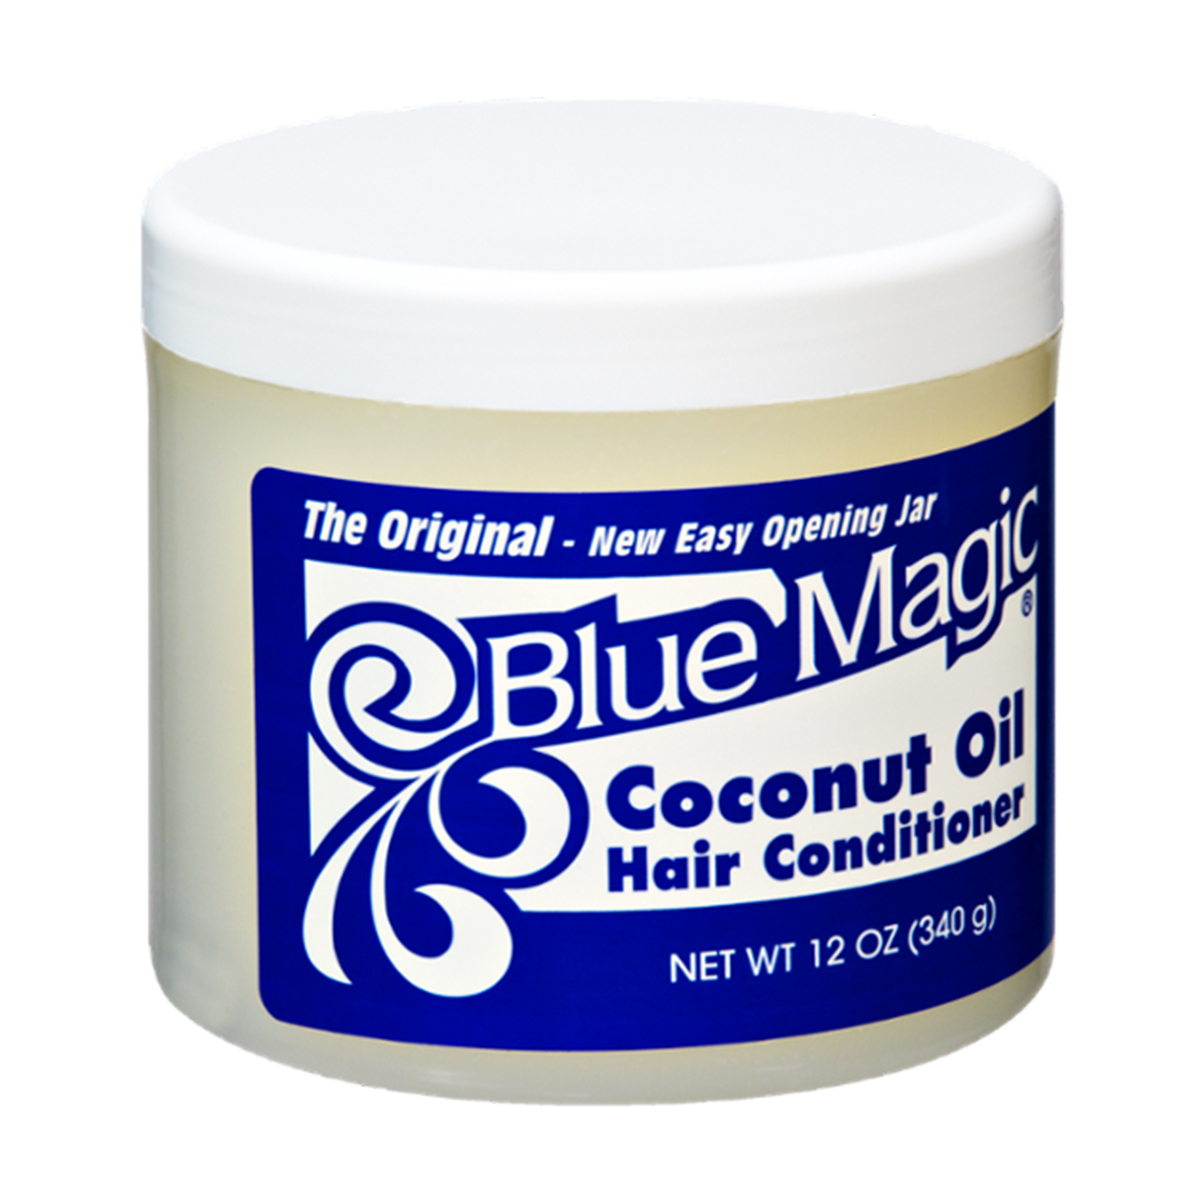 Blue Magic Hair Conditioner, Coconut Oil - 340 g